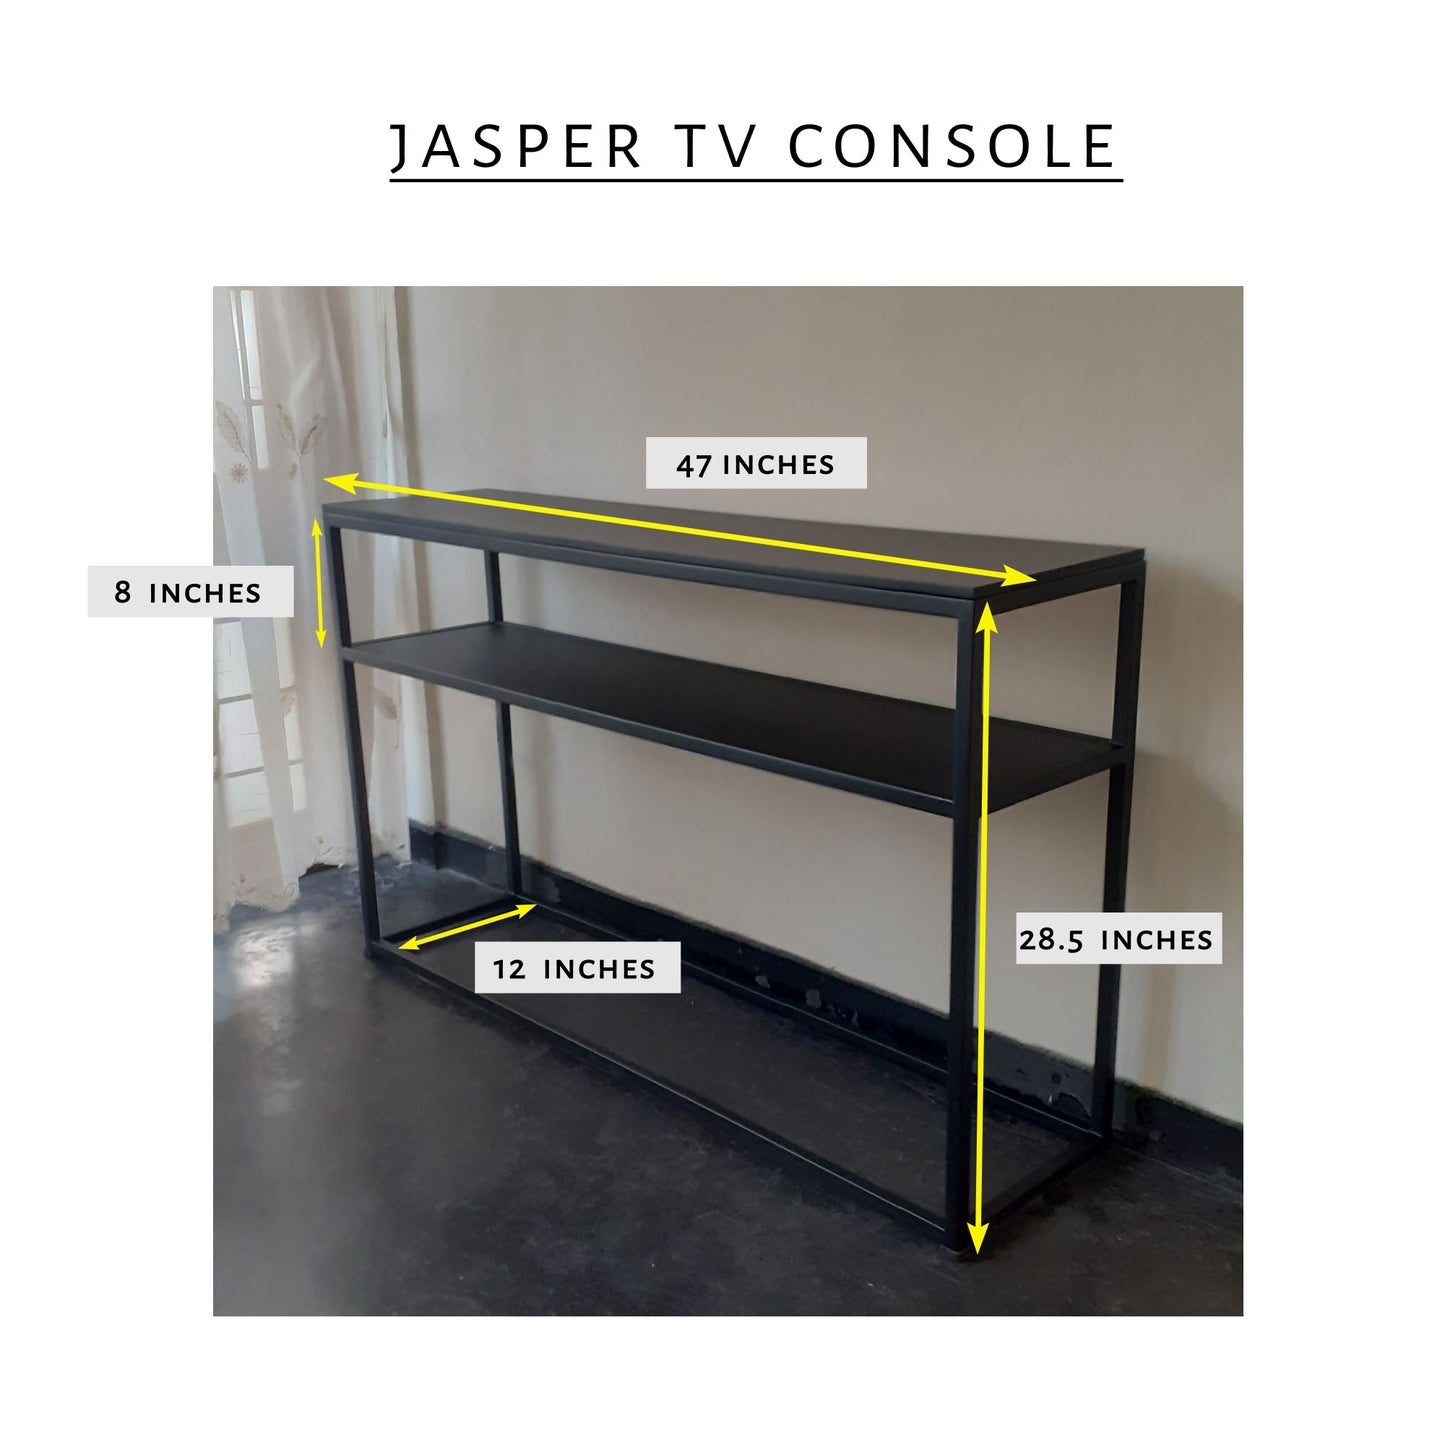 Jasper Console